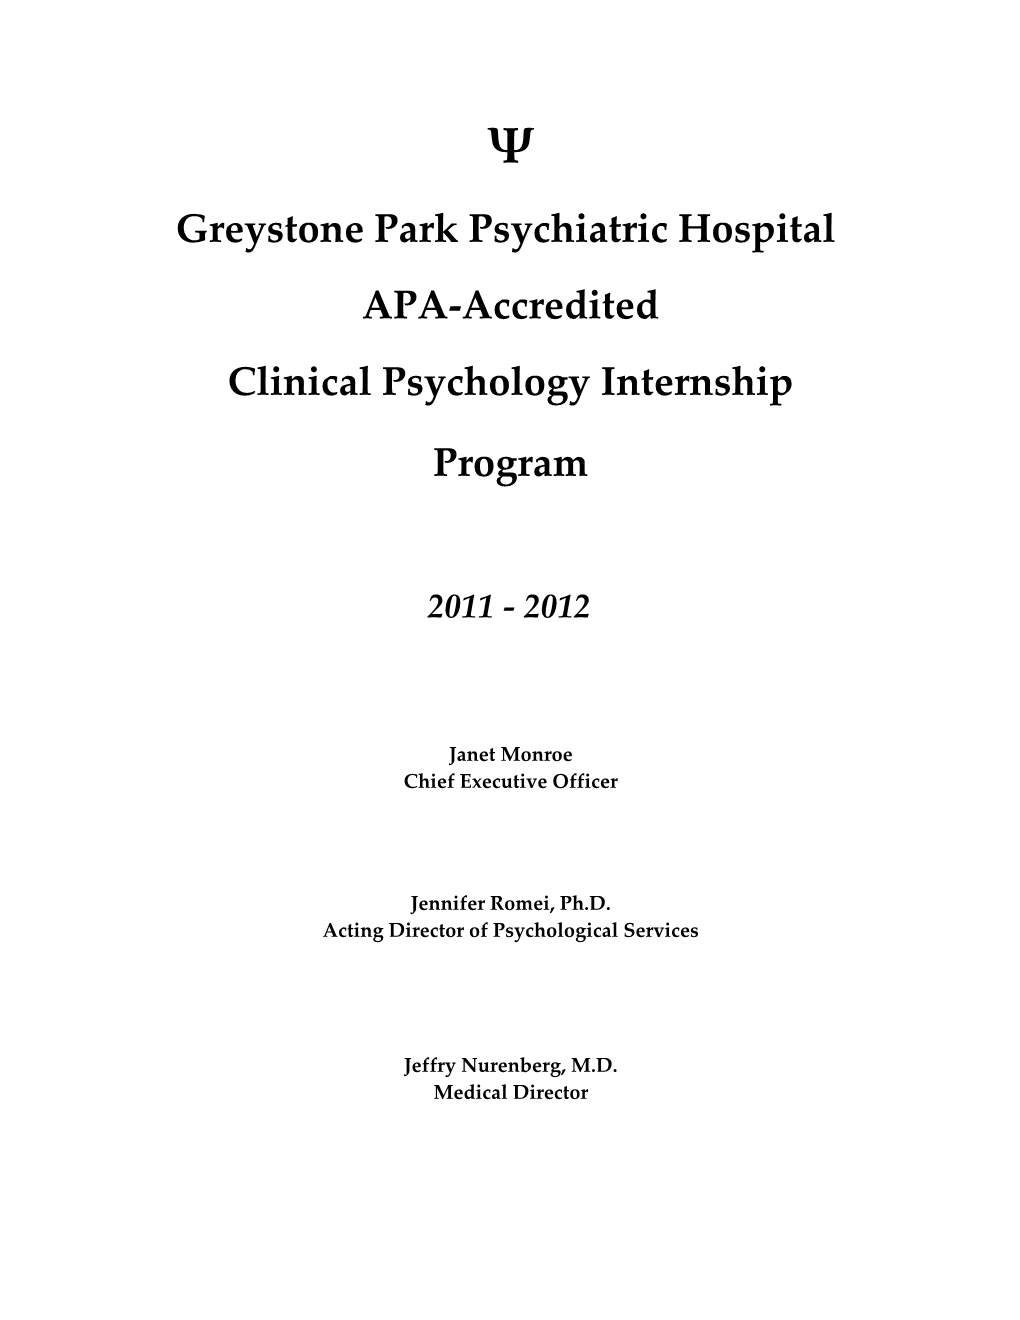 The Clinical Psychology Internship Training Program